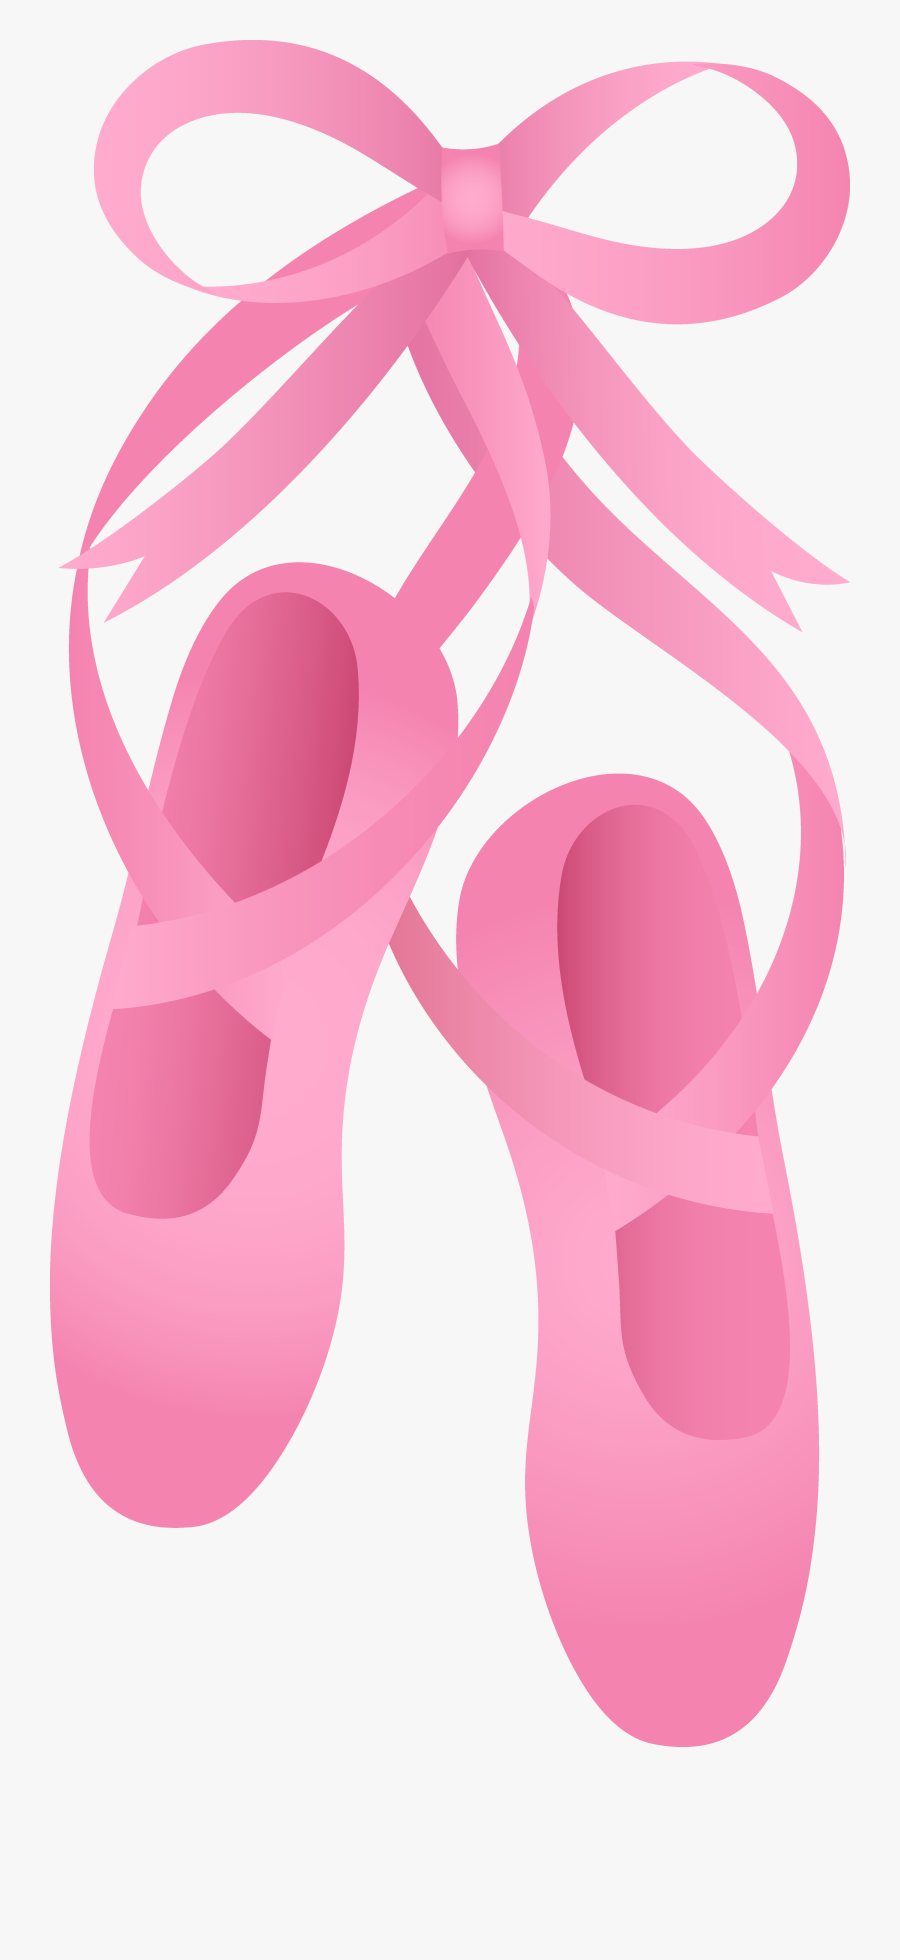 Ballerina Shoes Clipart - Ballet Slippers Clipart, Transparent Clipart